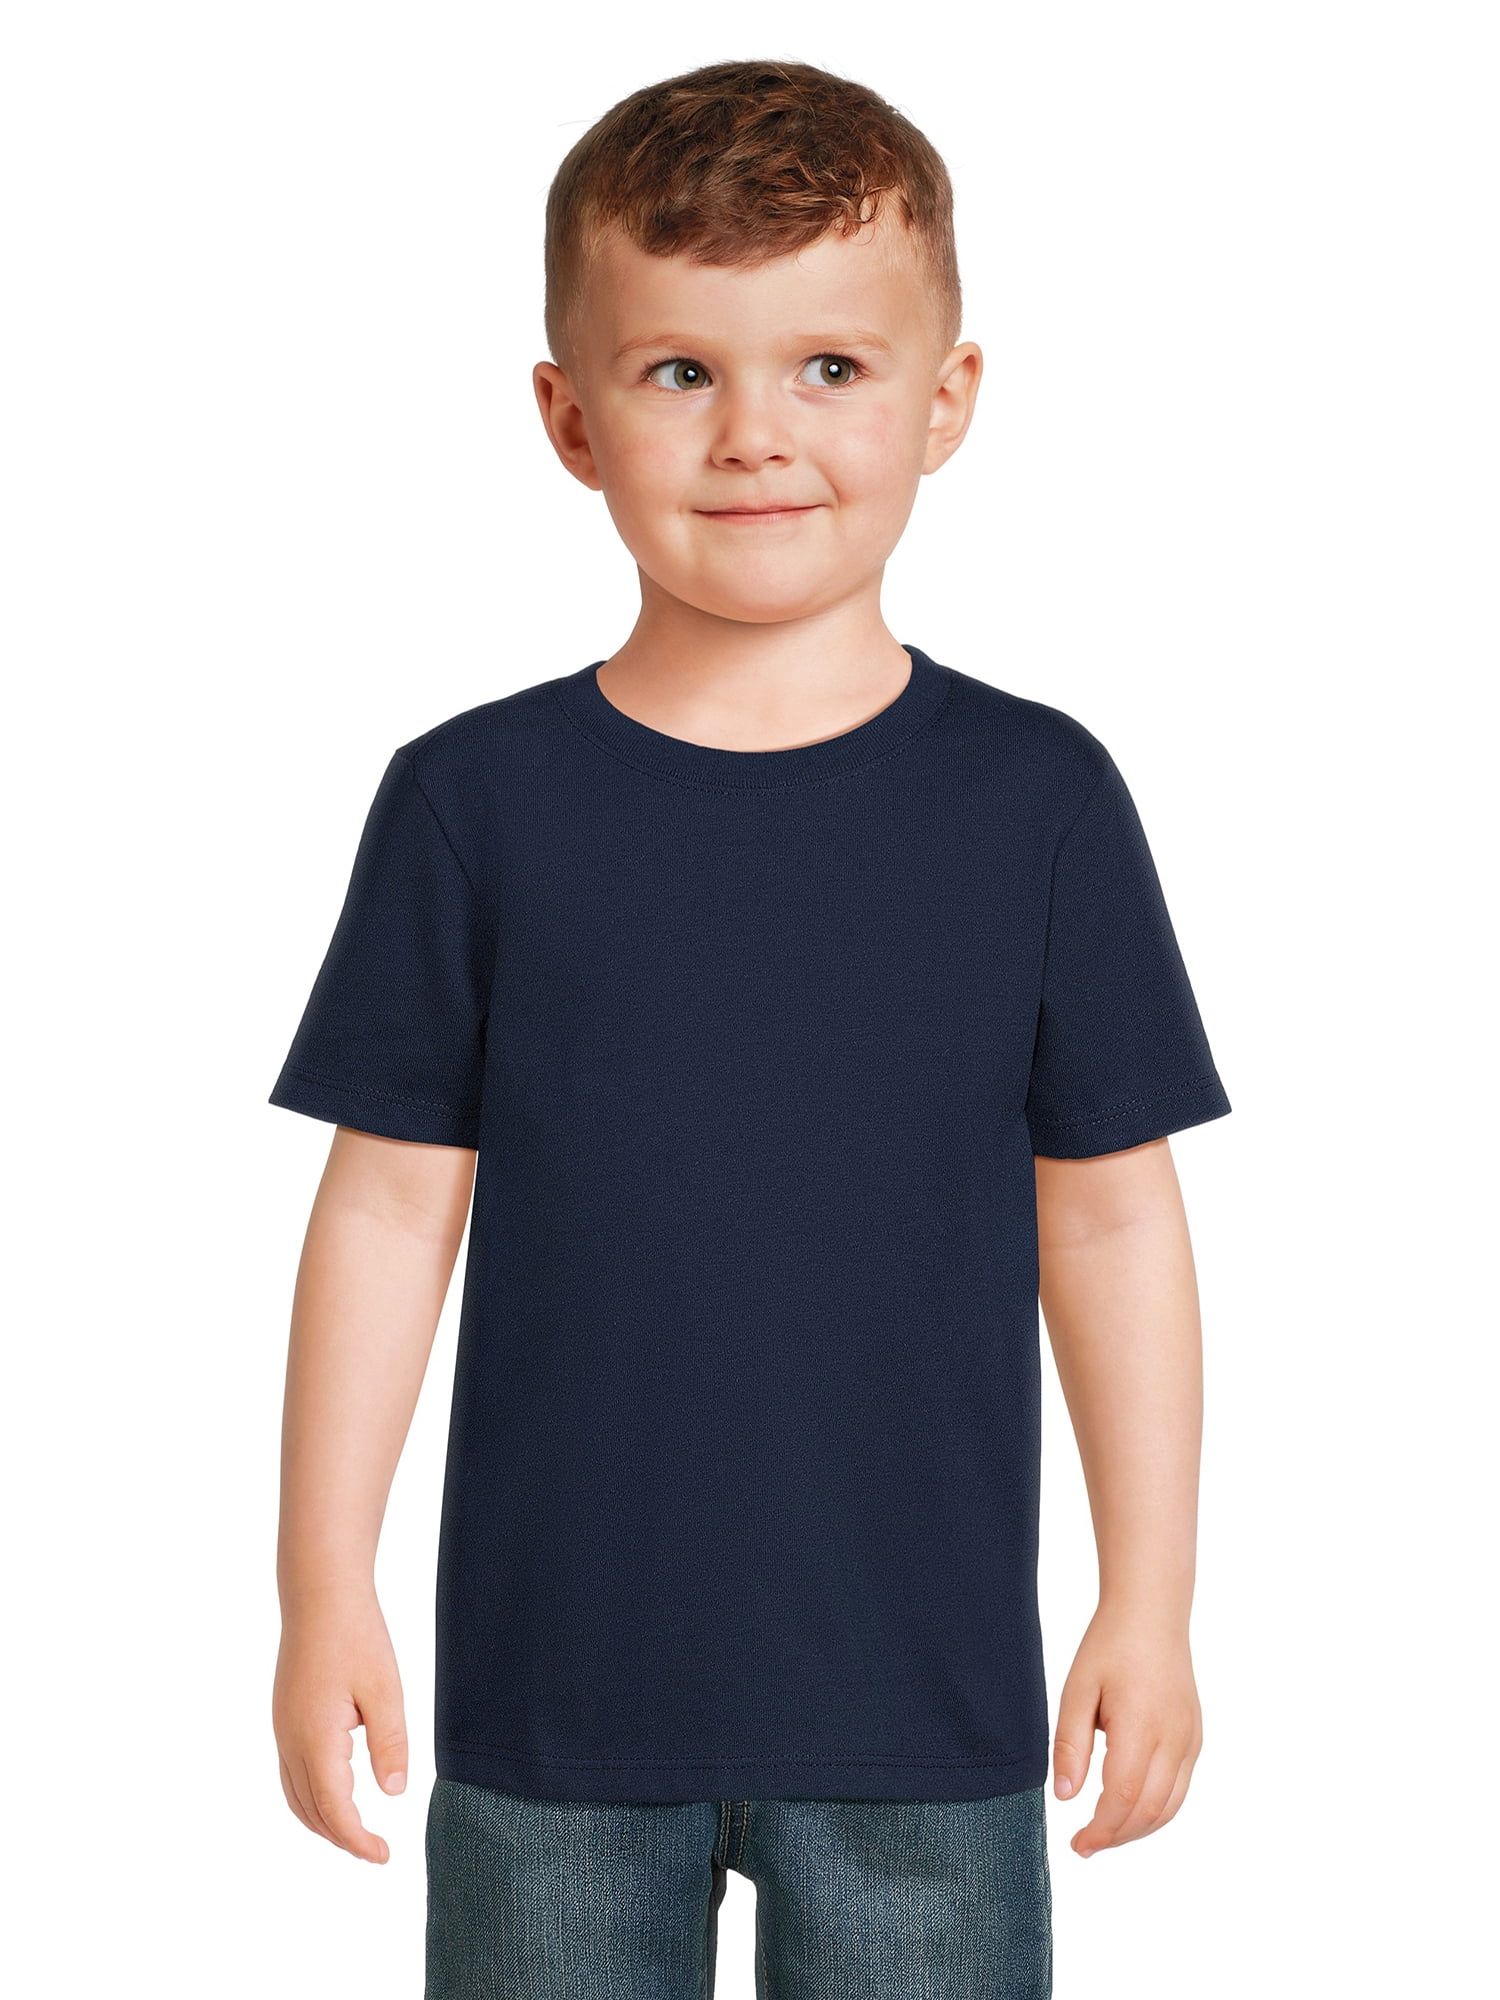 Garanimals Toddler Boy Short Sleeve Solid T-Shirt, Sizes 12M-5T | Walmart (US)